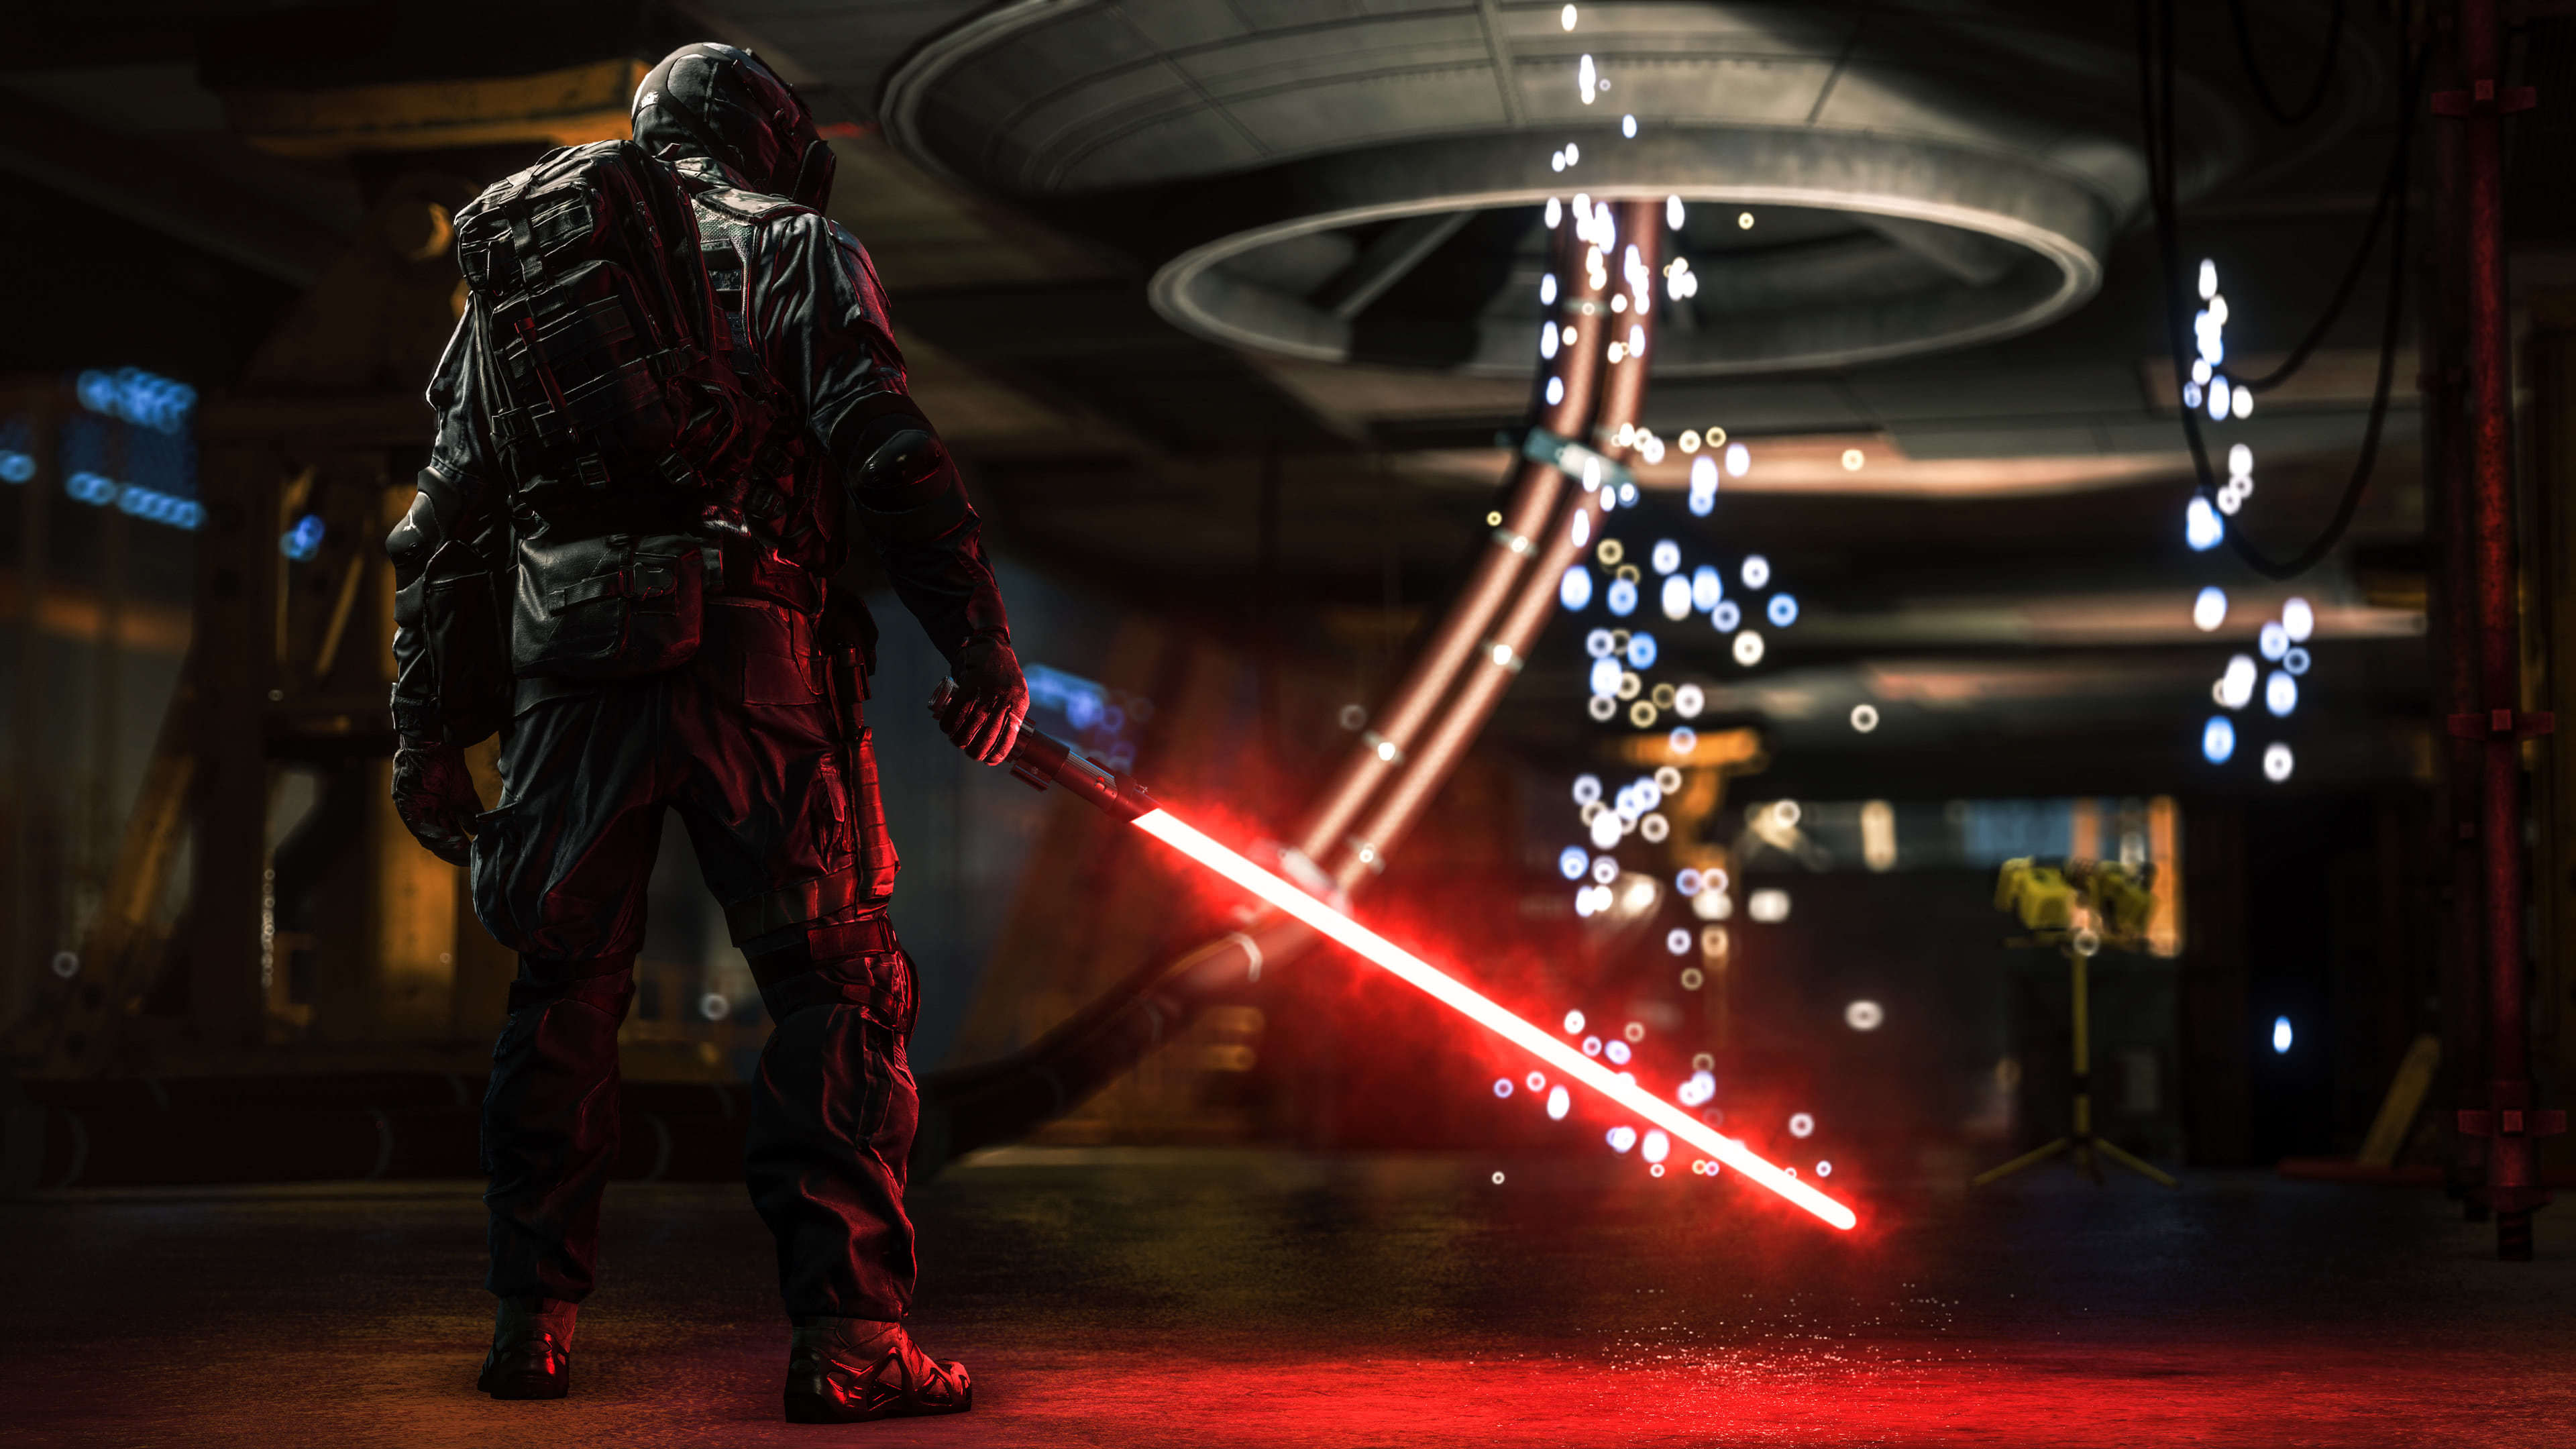 Star Wars Battlefront Soldier With Lightsaber UHD 4K Wallpaper | Pixelz